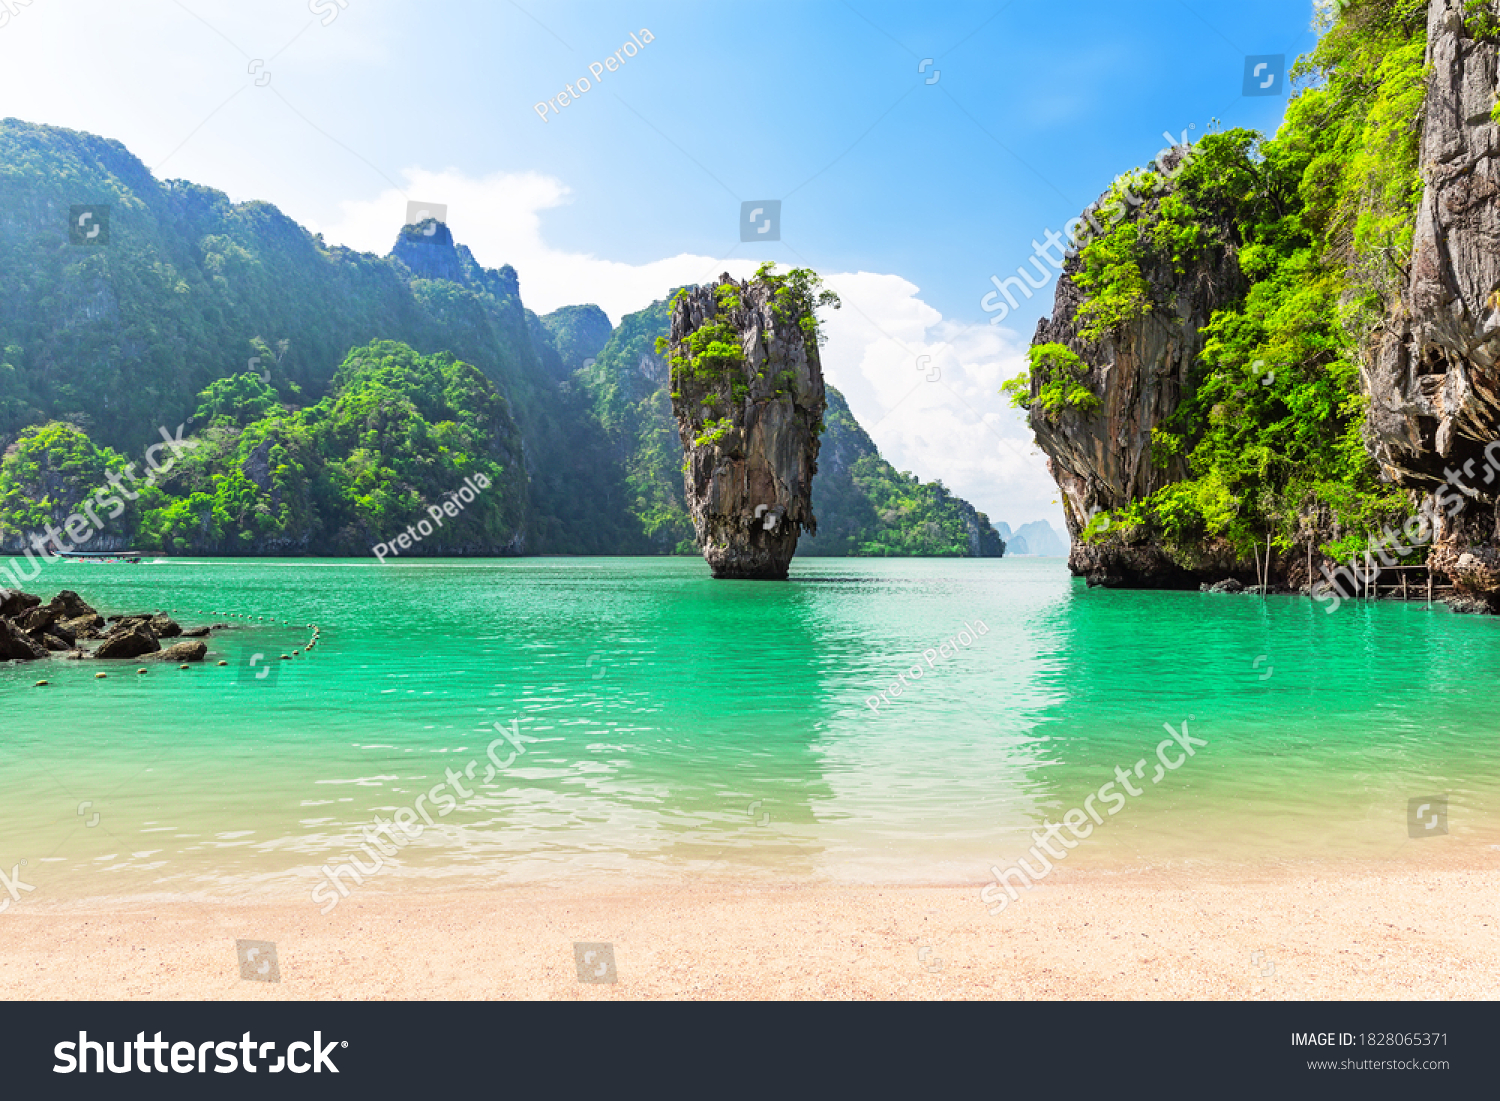 Famous James Bond island near Phuket in Thailand. Travel photo of James Bond island in Phang Nga bay, Thailand.  #1828065371